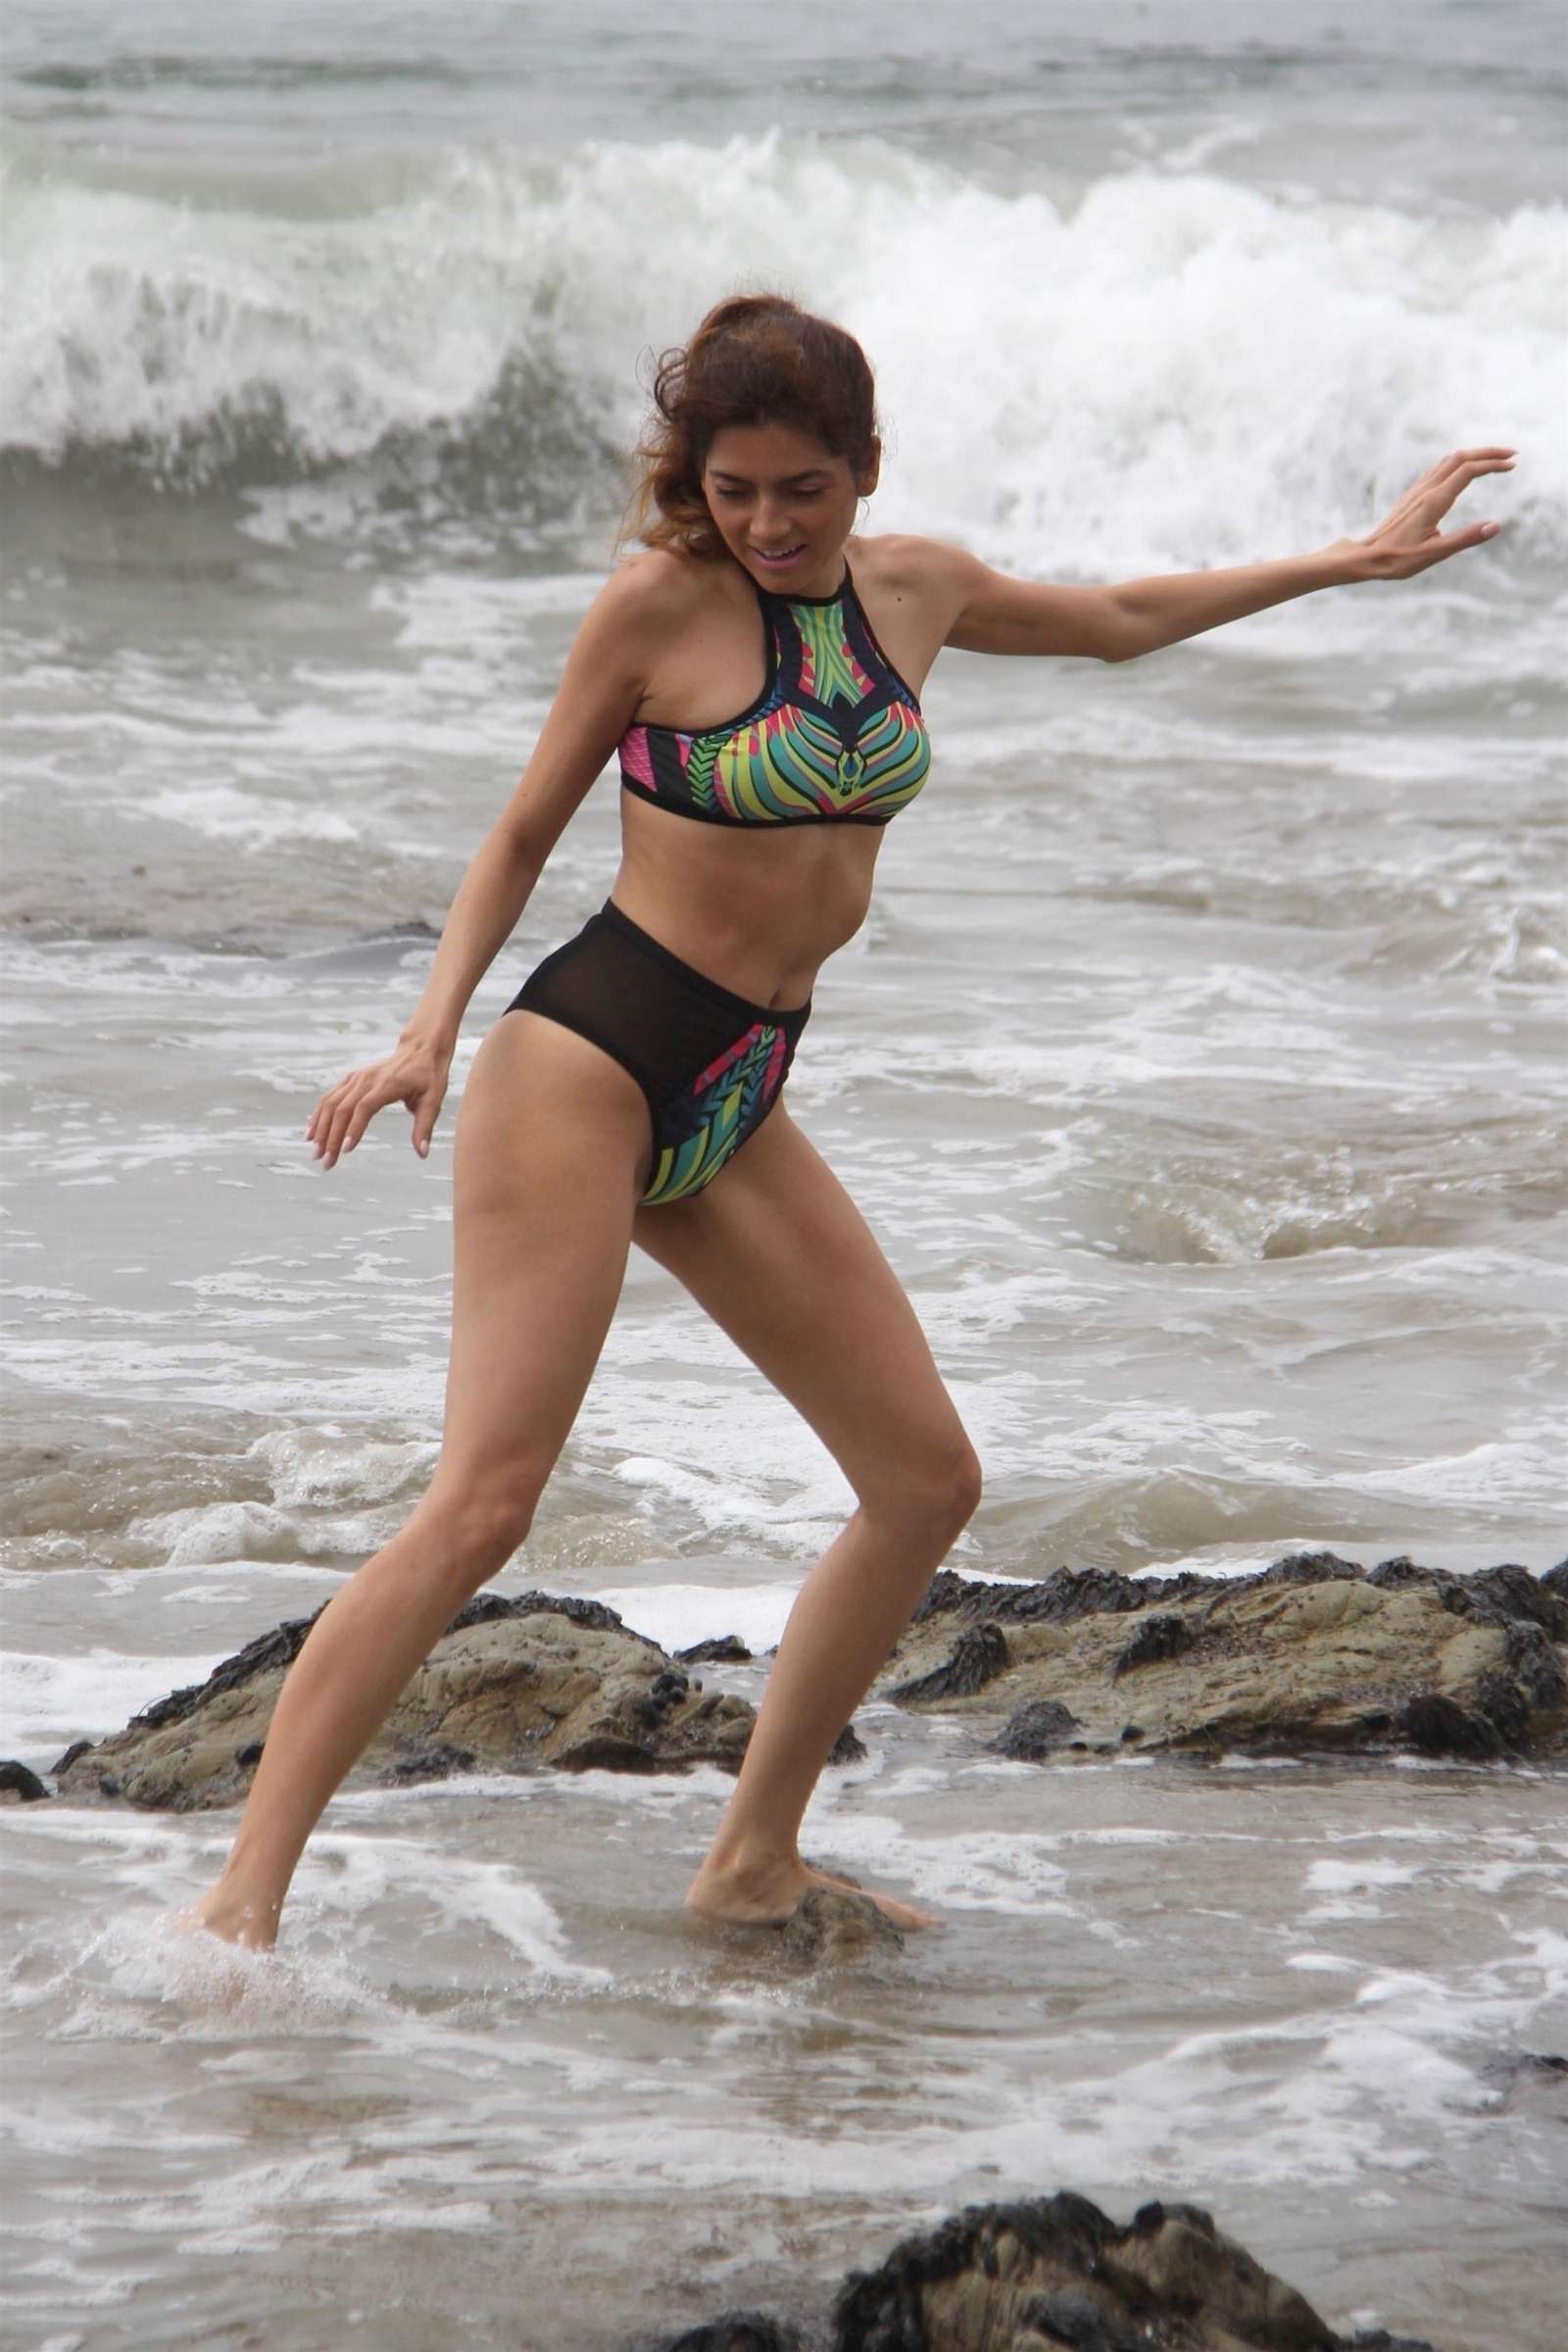 Blanca Blanco in Multi-Colored Bikini at the beach in Malibu